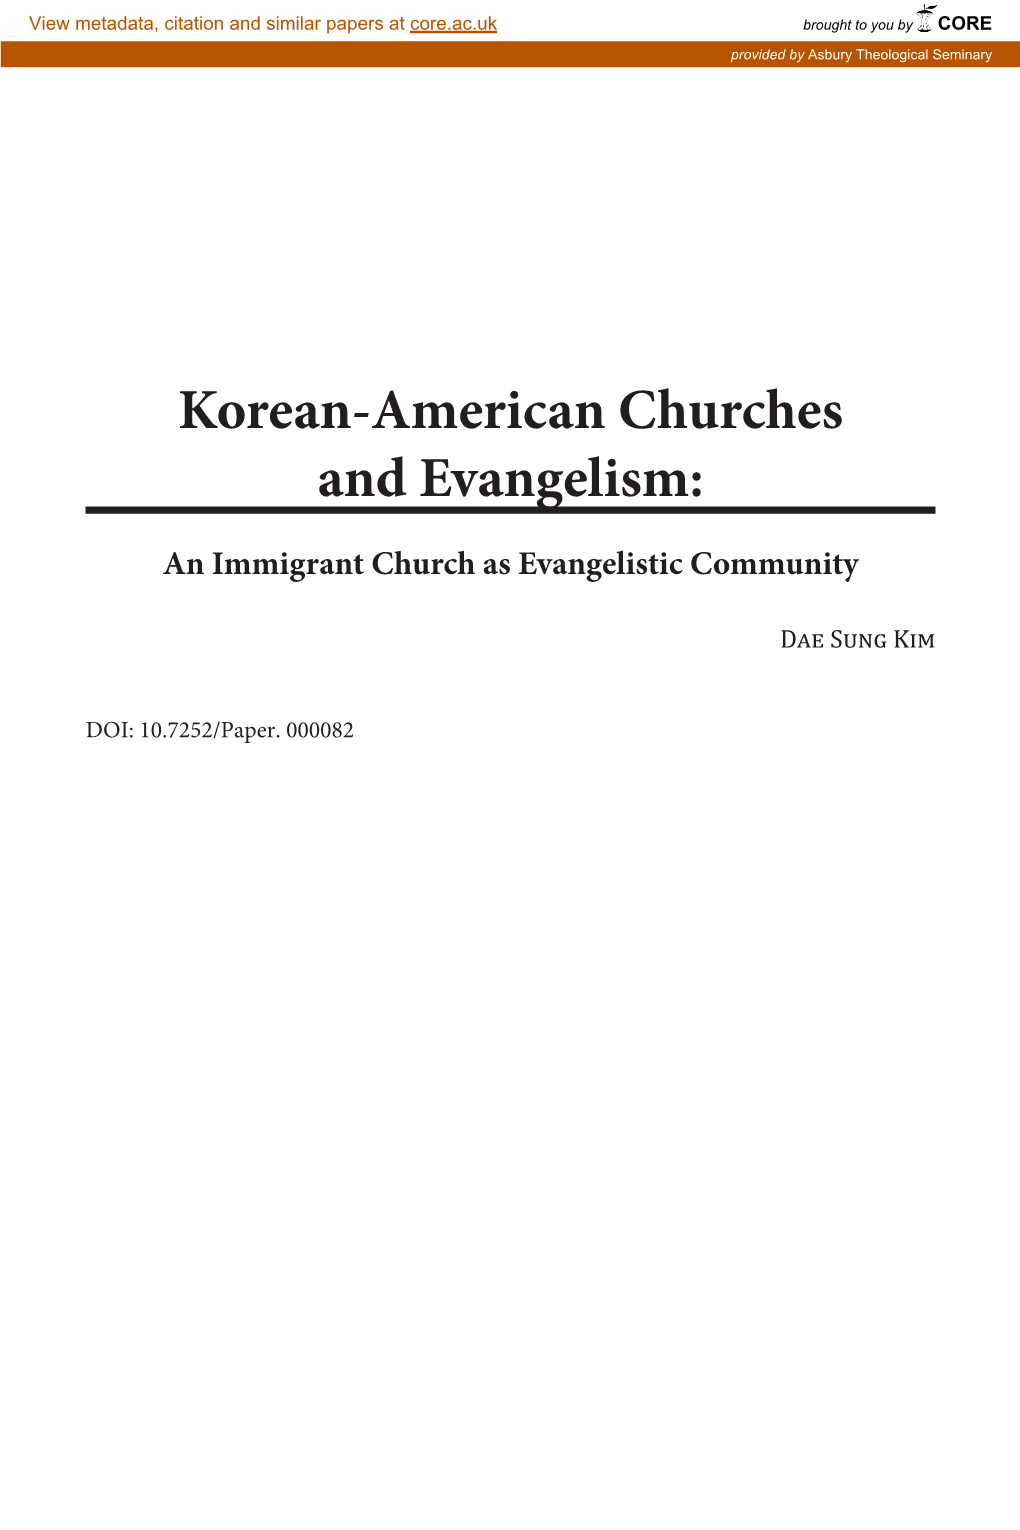 Korean-American Churches and Evangelism